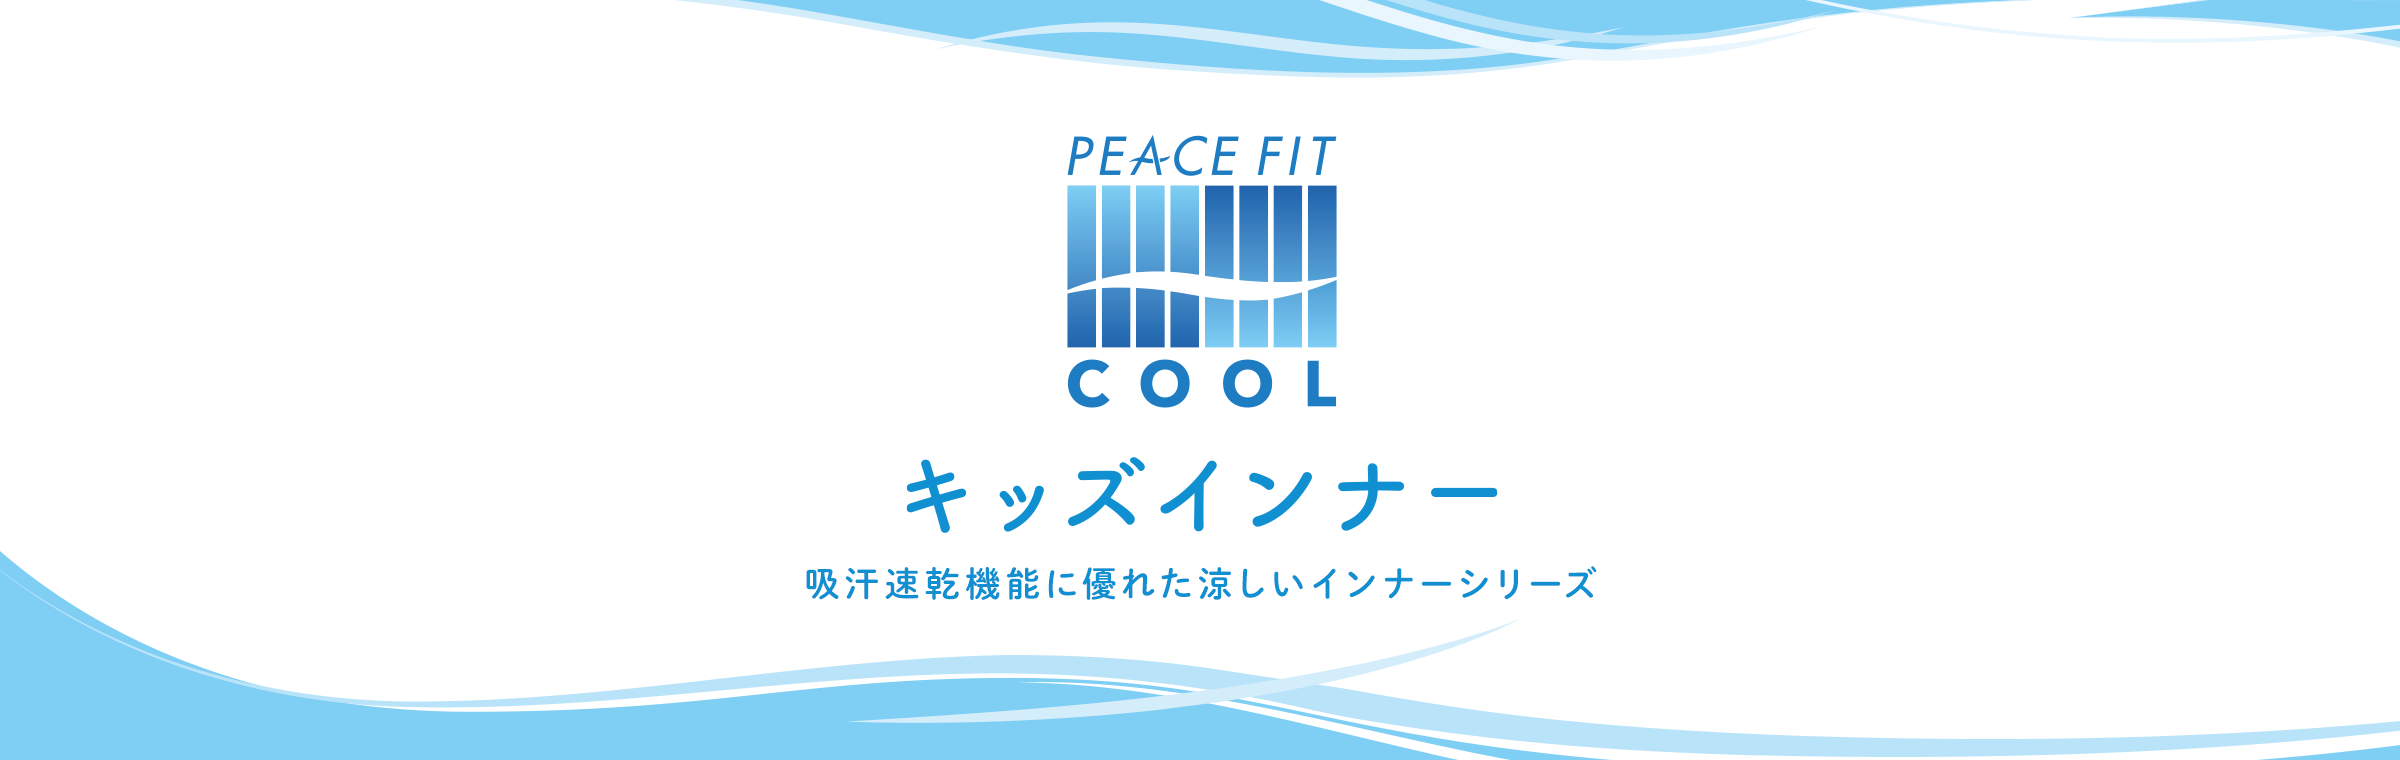 PEACE FIT COOL ピースフィット キッズインナー 吸汗速乾機能に優れた涼しいインナーシリーズ